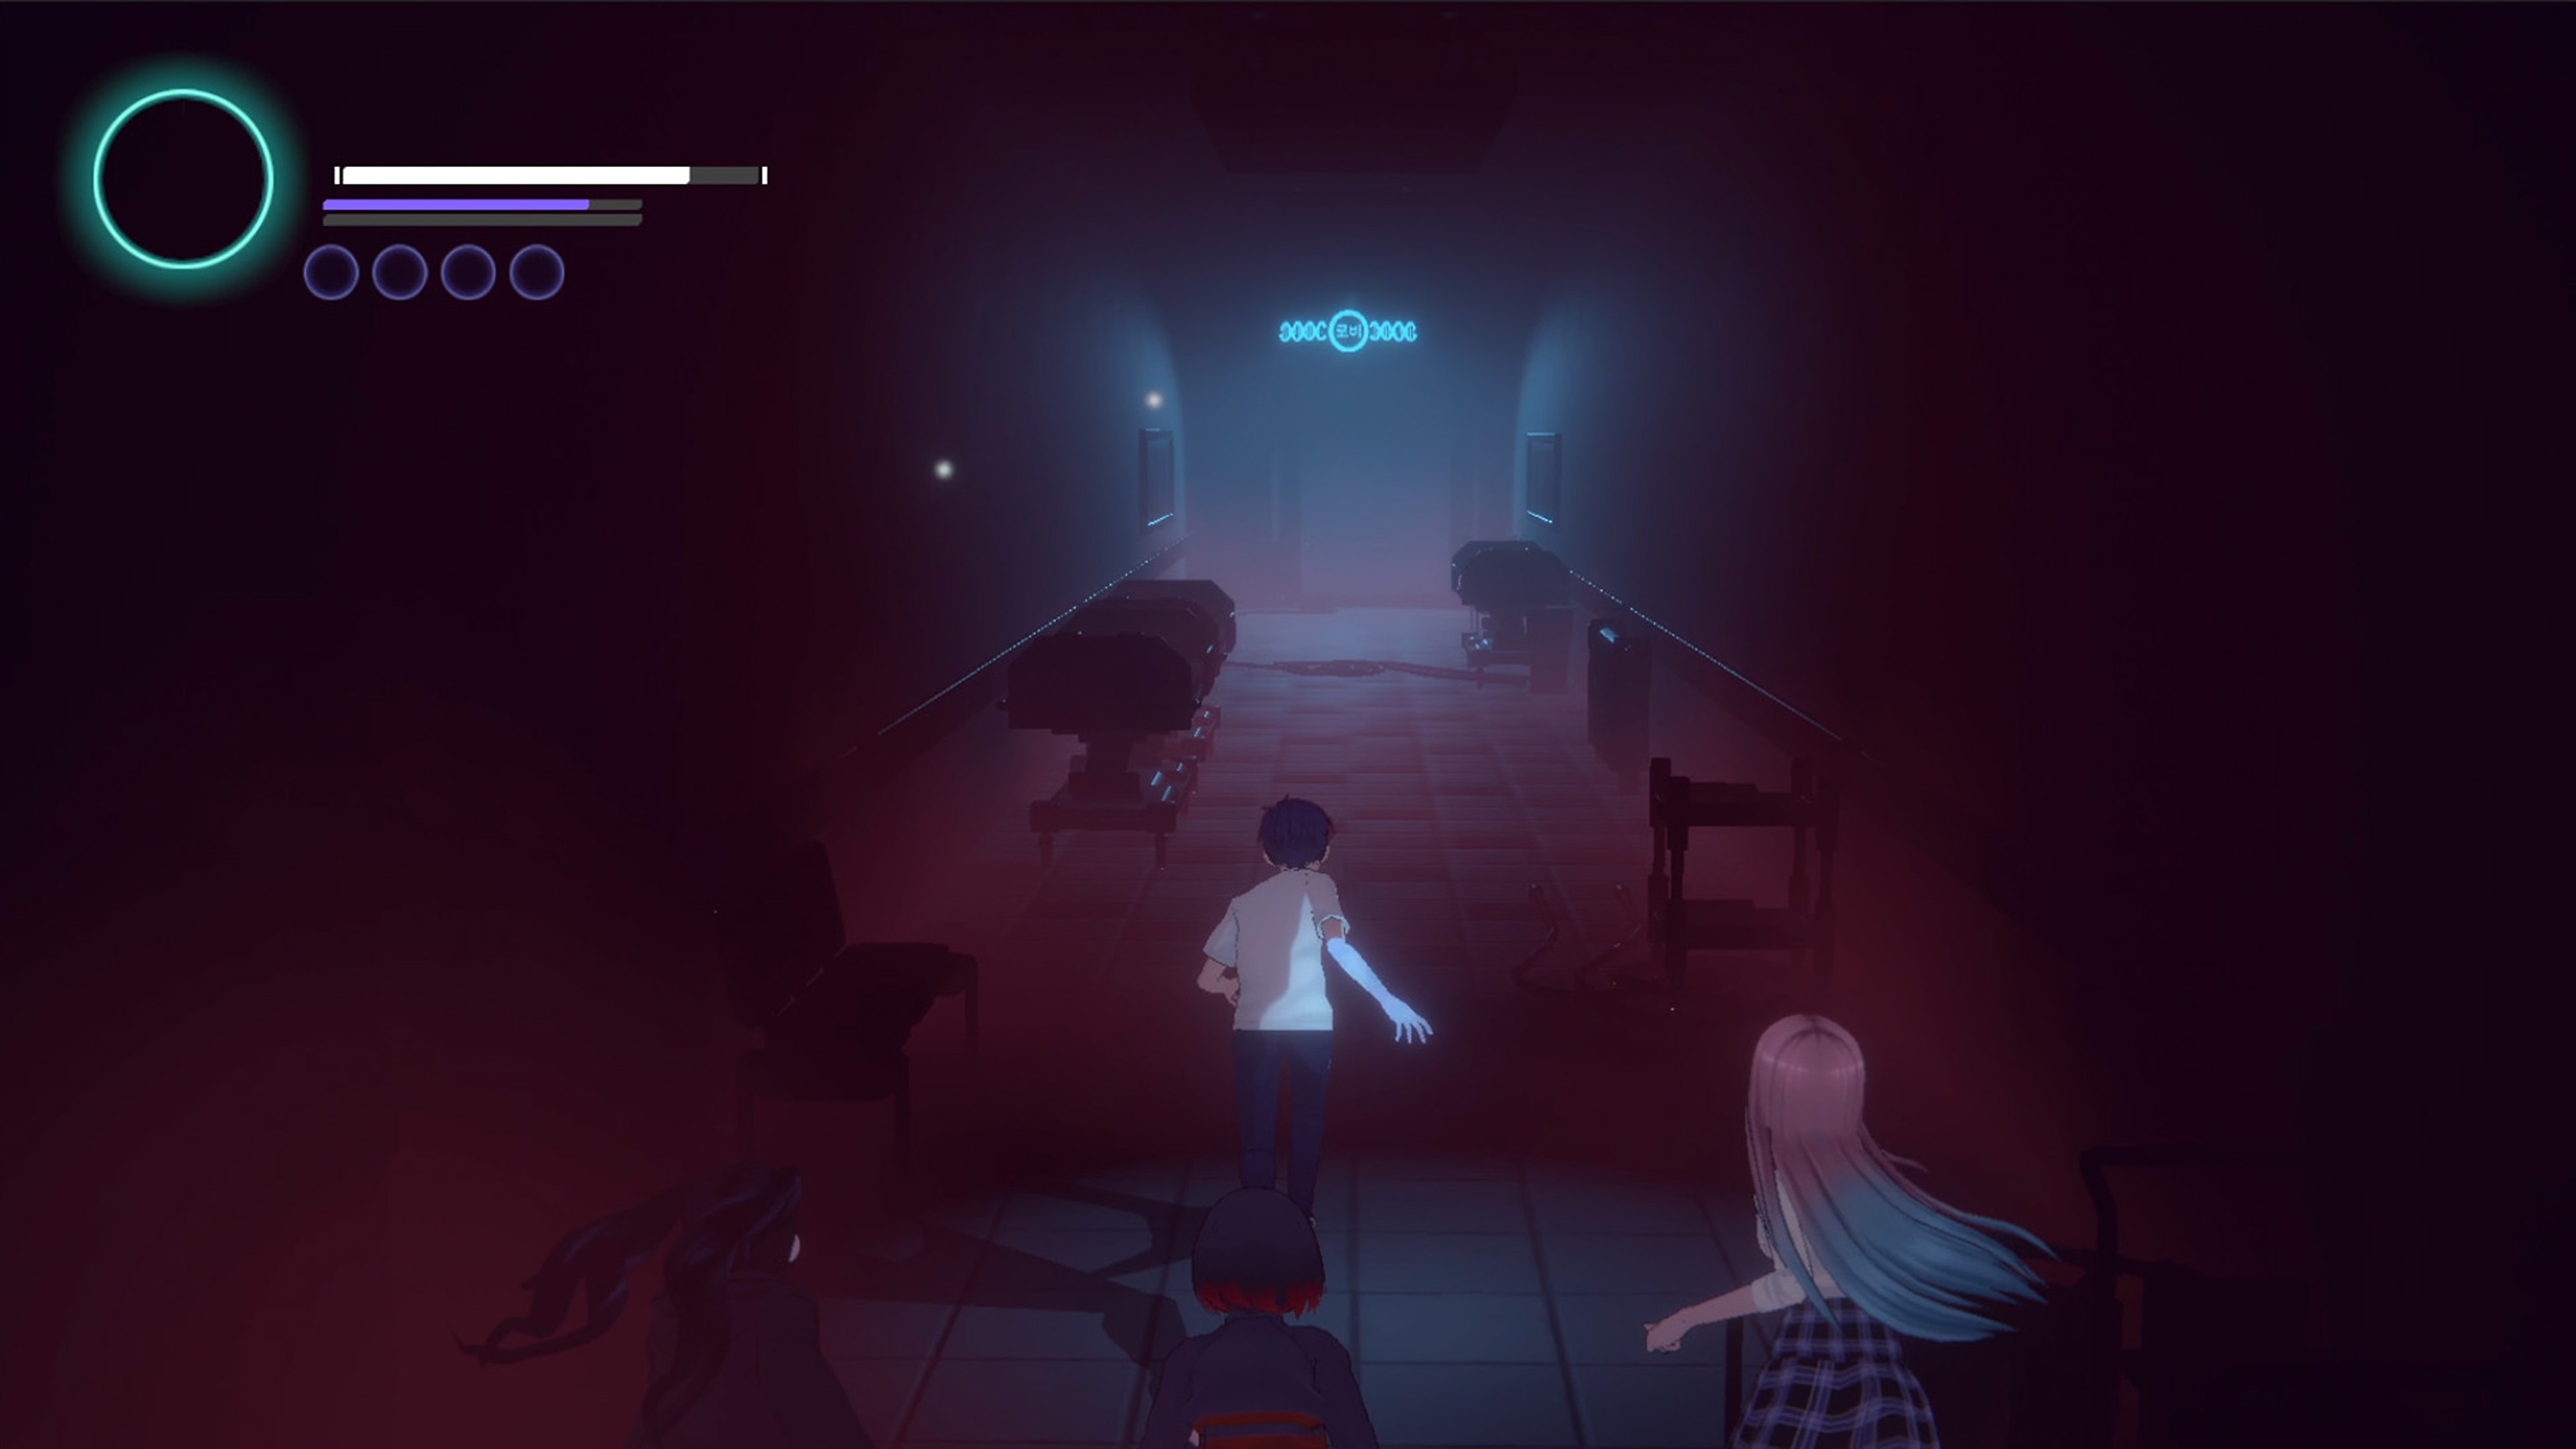 Captura de pantalla de Eternights mostrando a dos adolescentes corriendo por un pasillo tenebroso. 